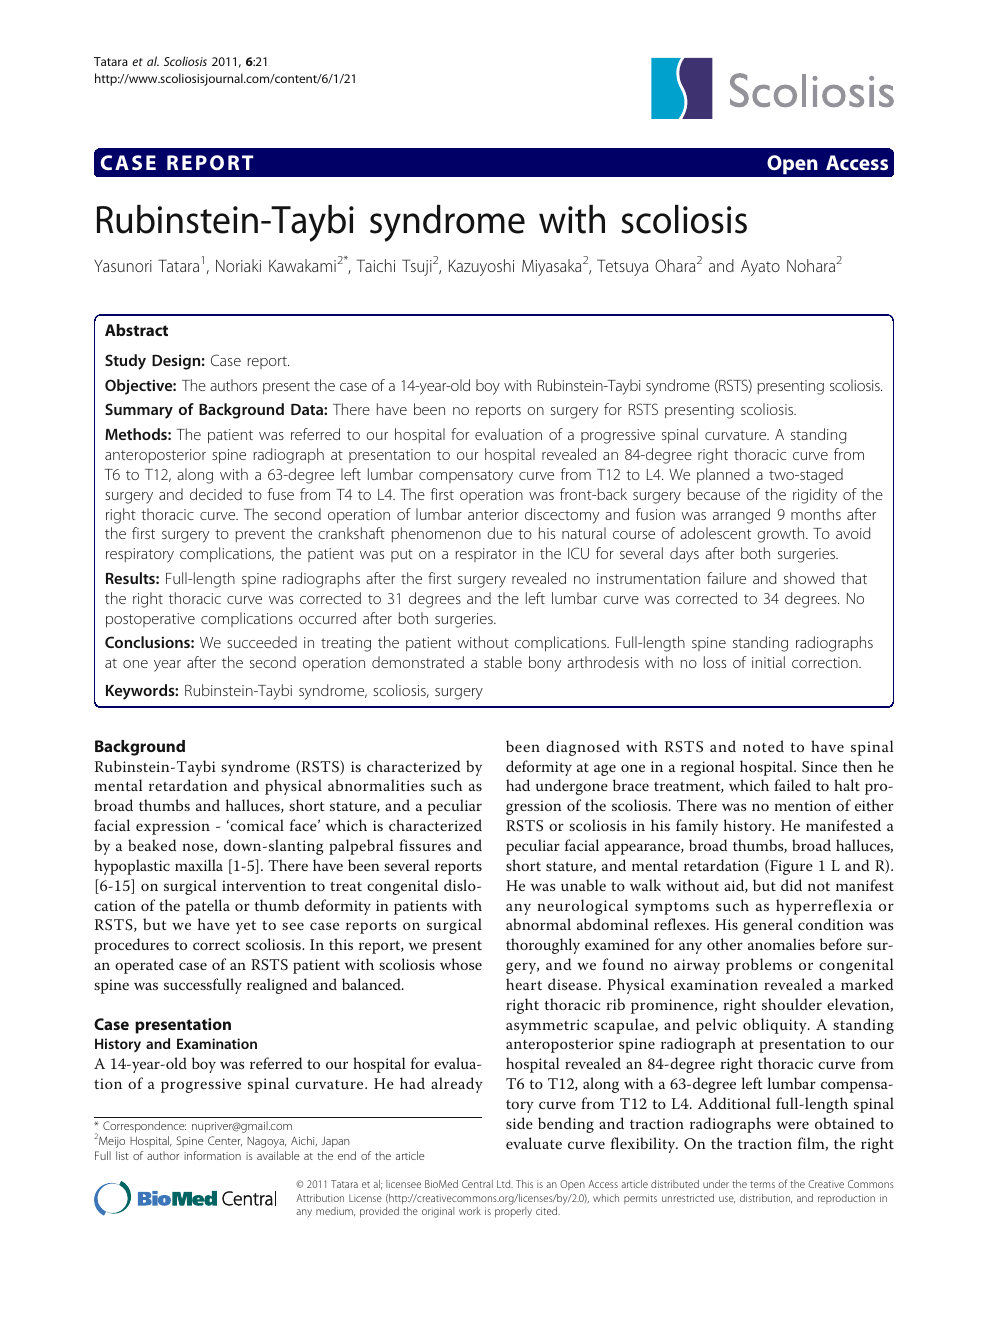 Rubinstein-Taybi Syndrome: A case report